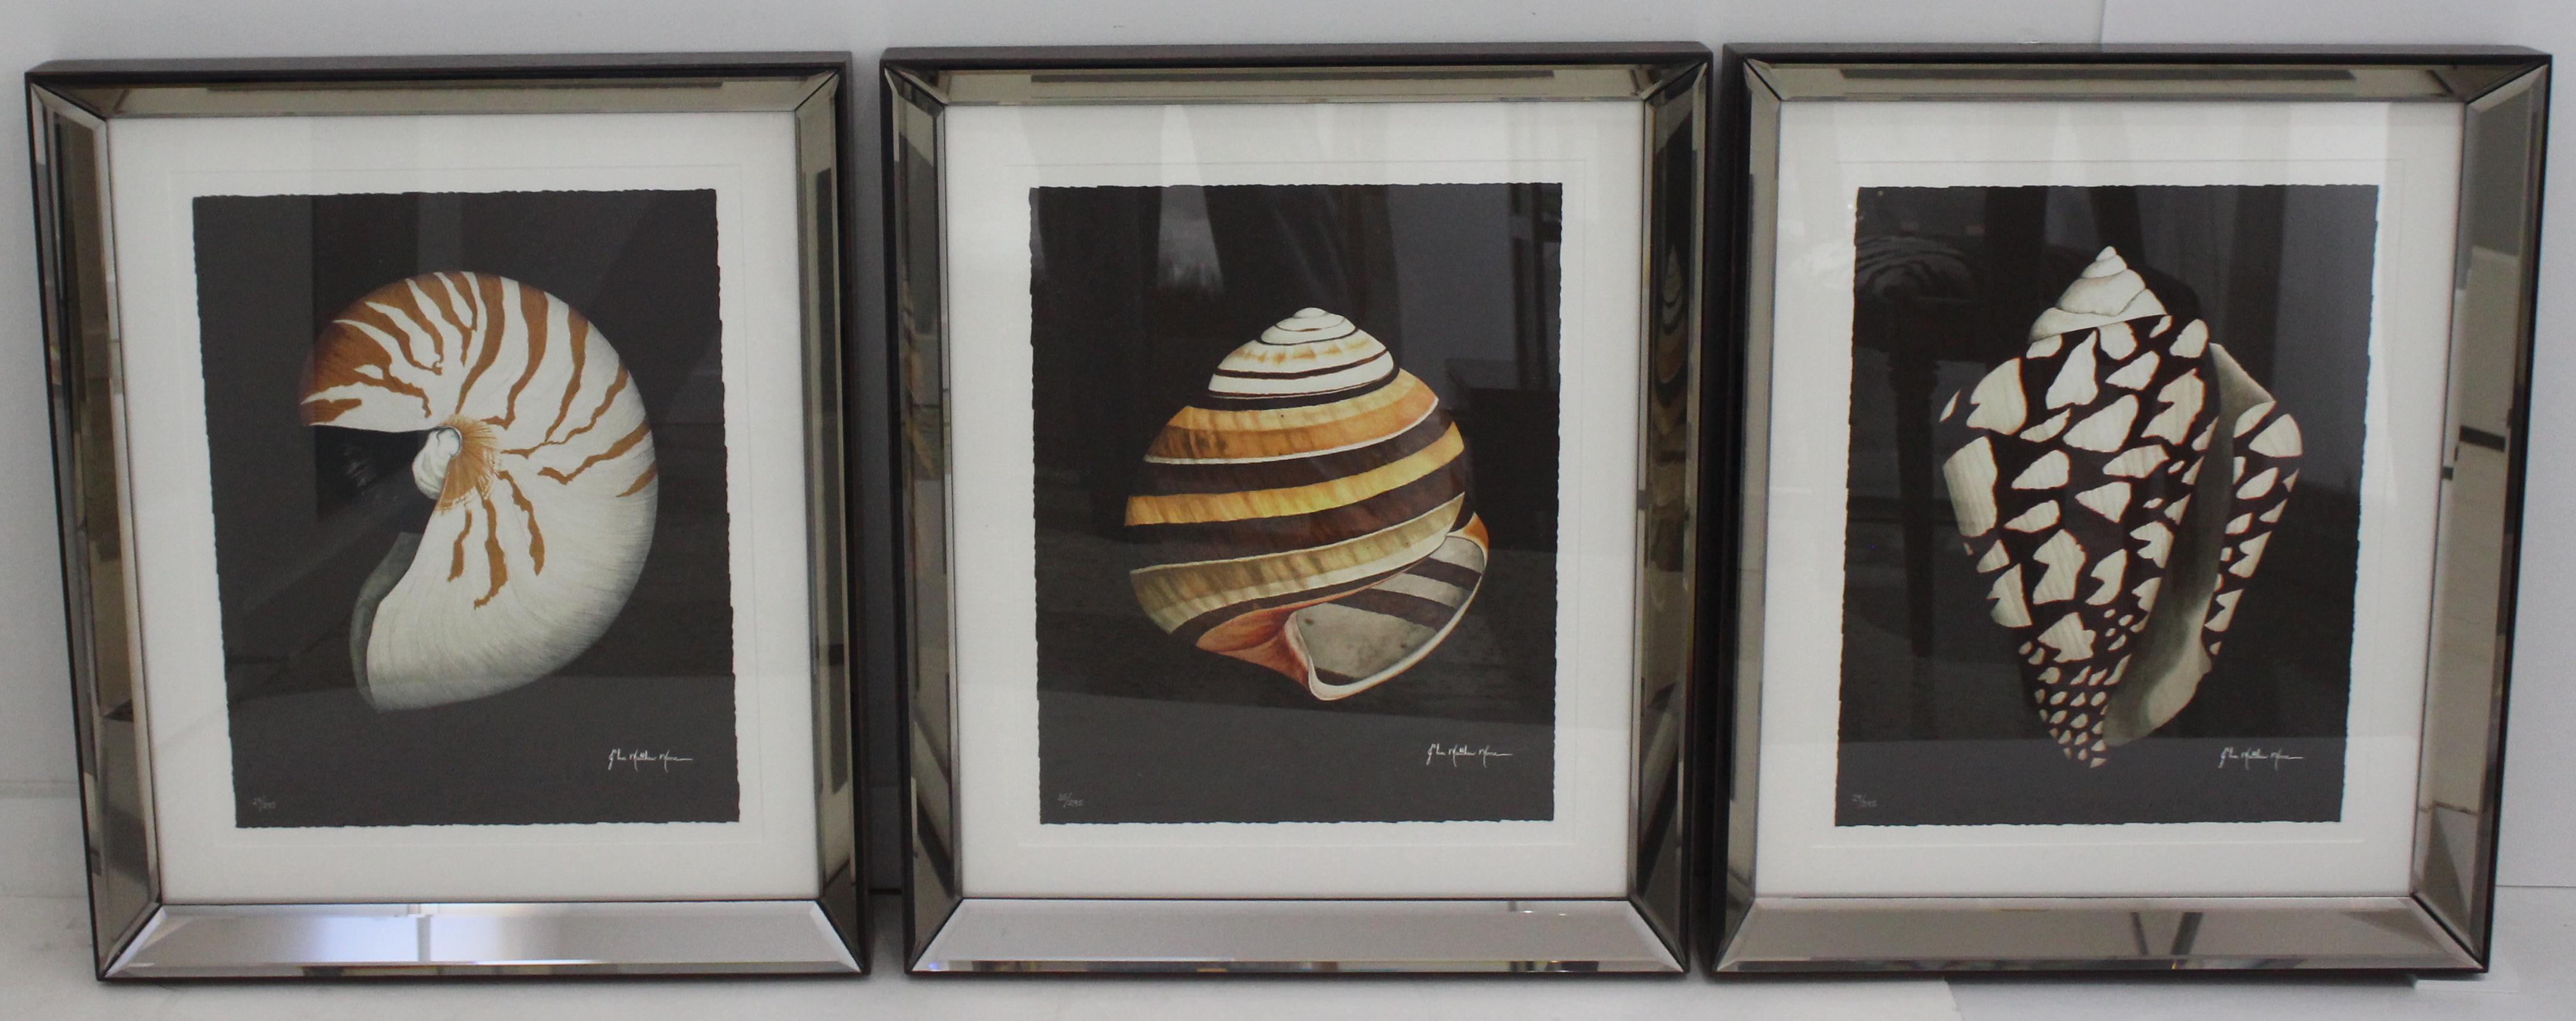 American John Matthew Moore Shell Prints 2006 in Custom Mirror Frames, a Set of 3